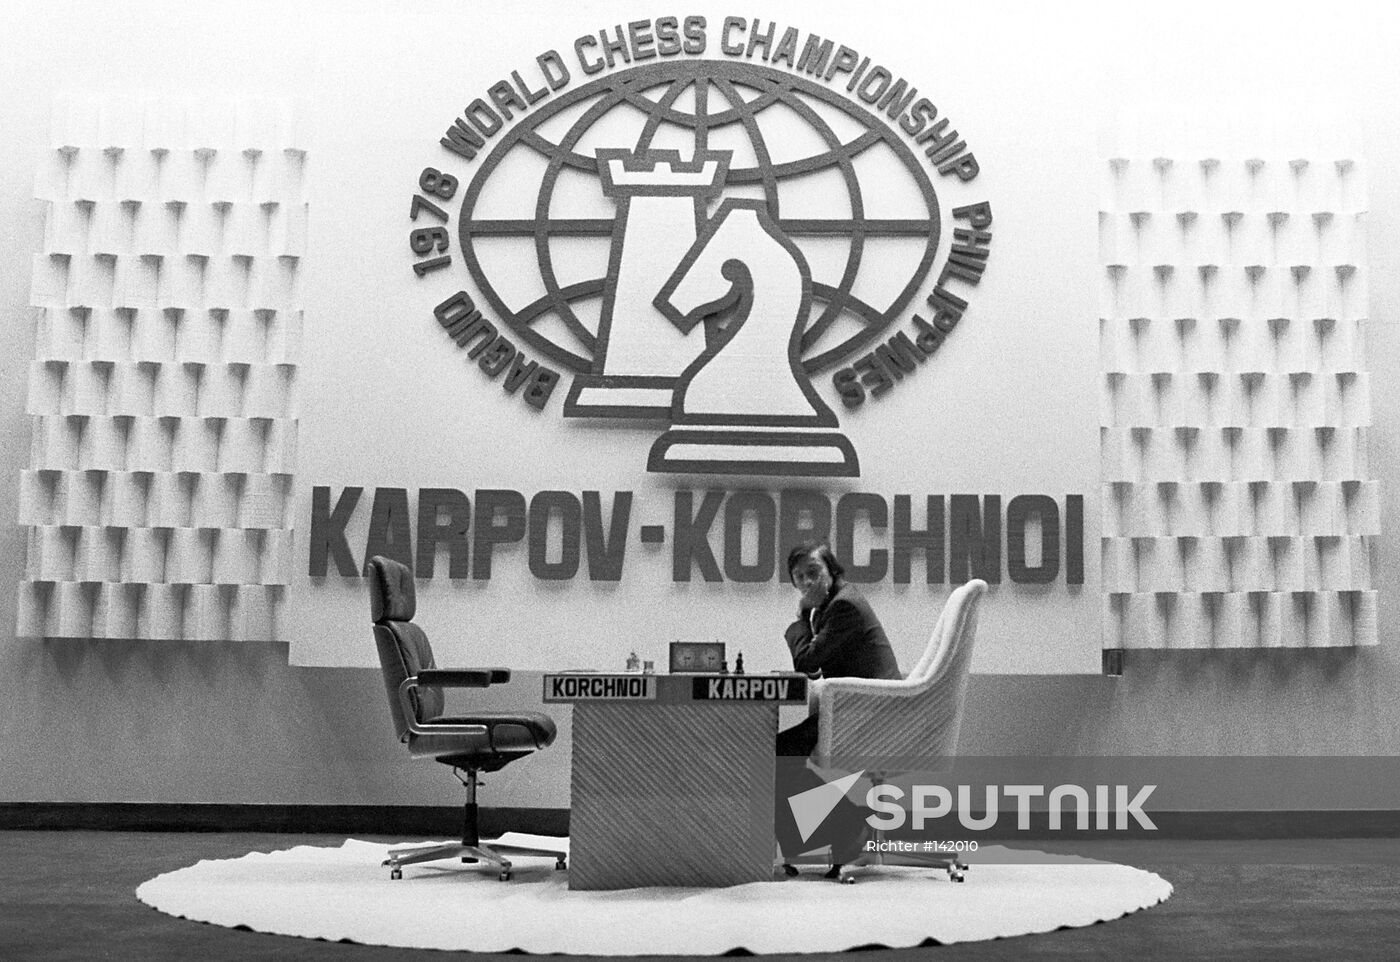 CHESS CHAMPIONSHIP ANATOLY KARPOV VIKTOR KORCHNOI